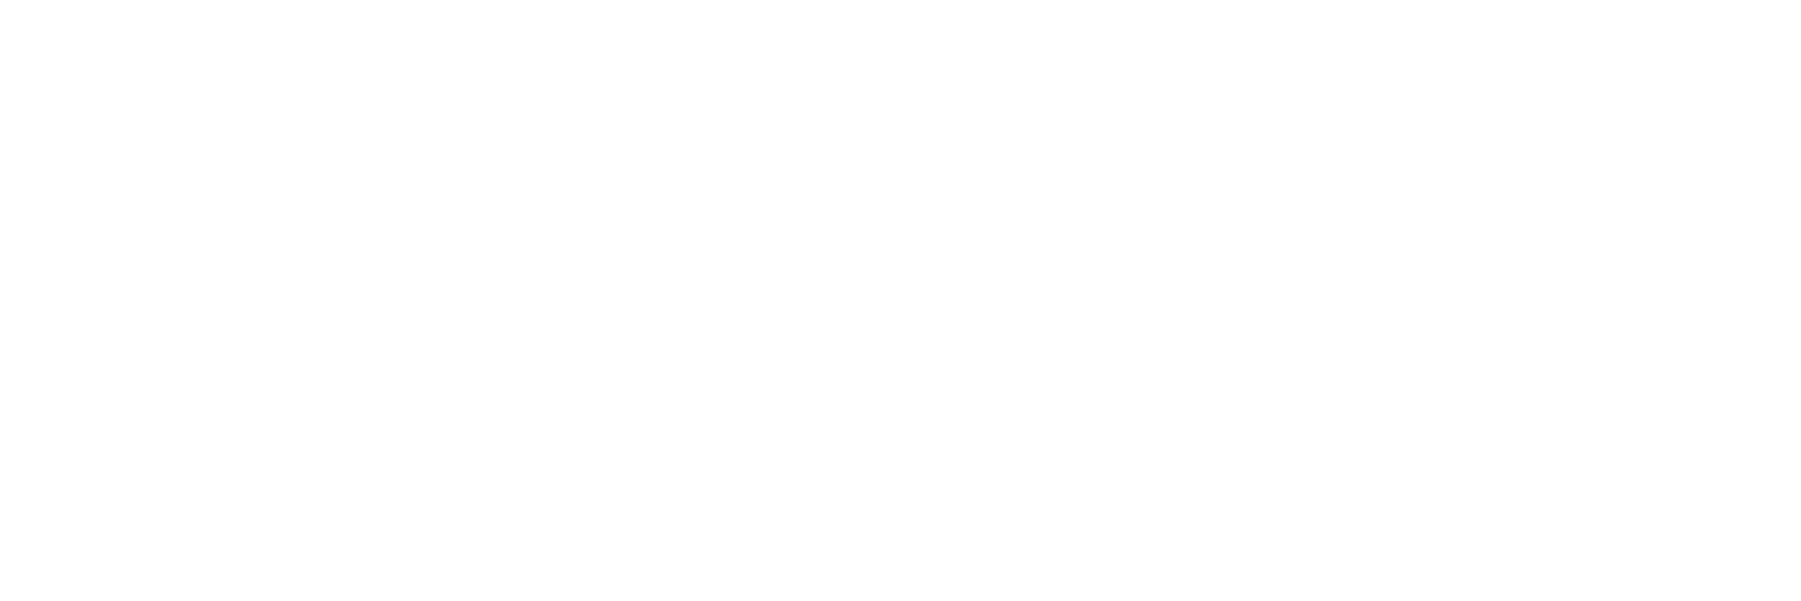 Waggoner & Ball Logo